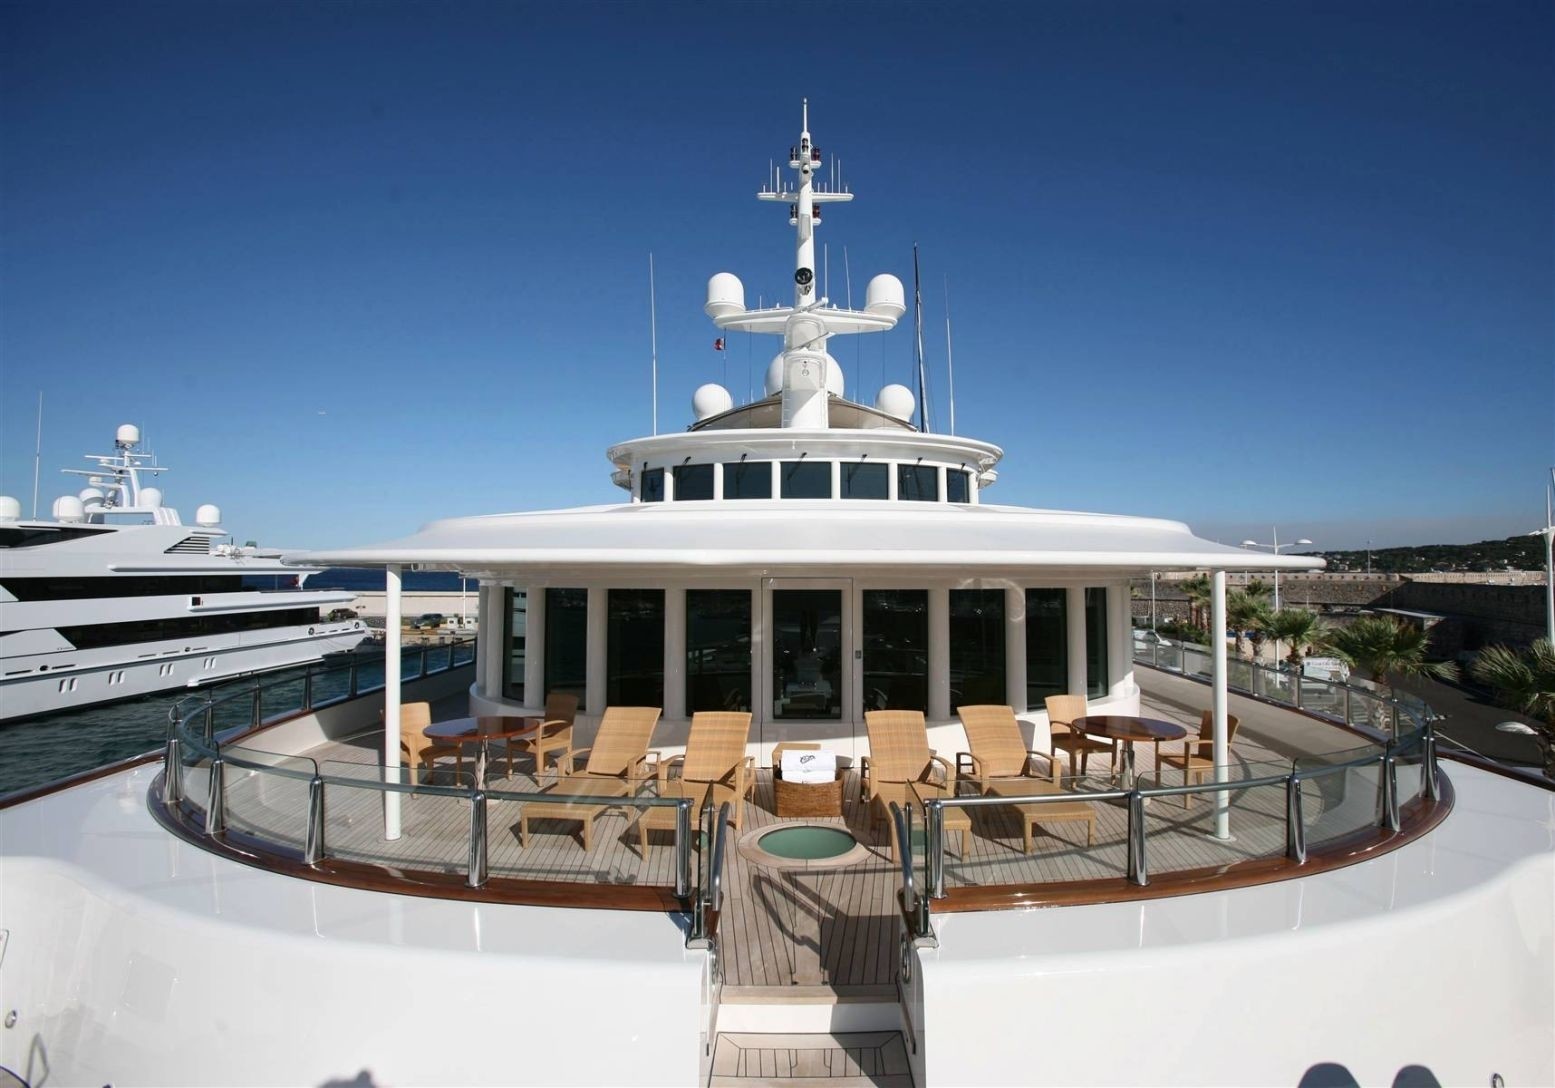 tatoosh yacht charter